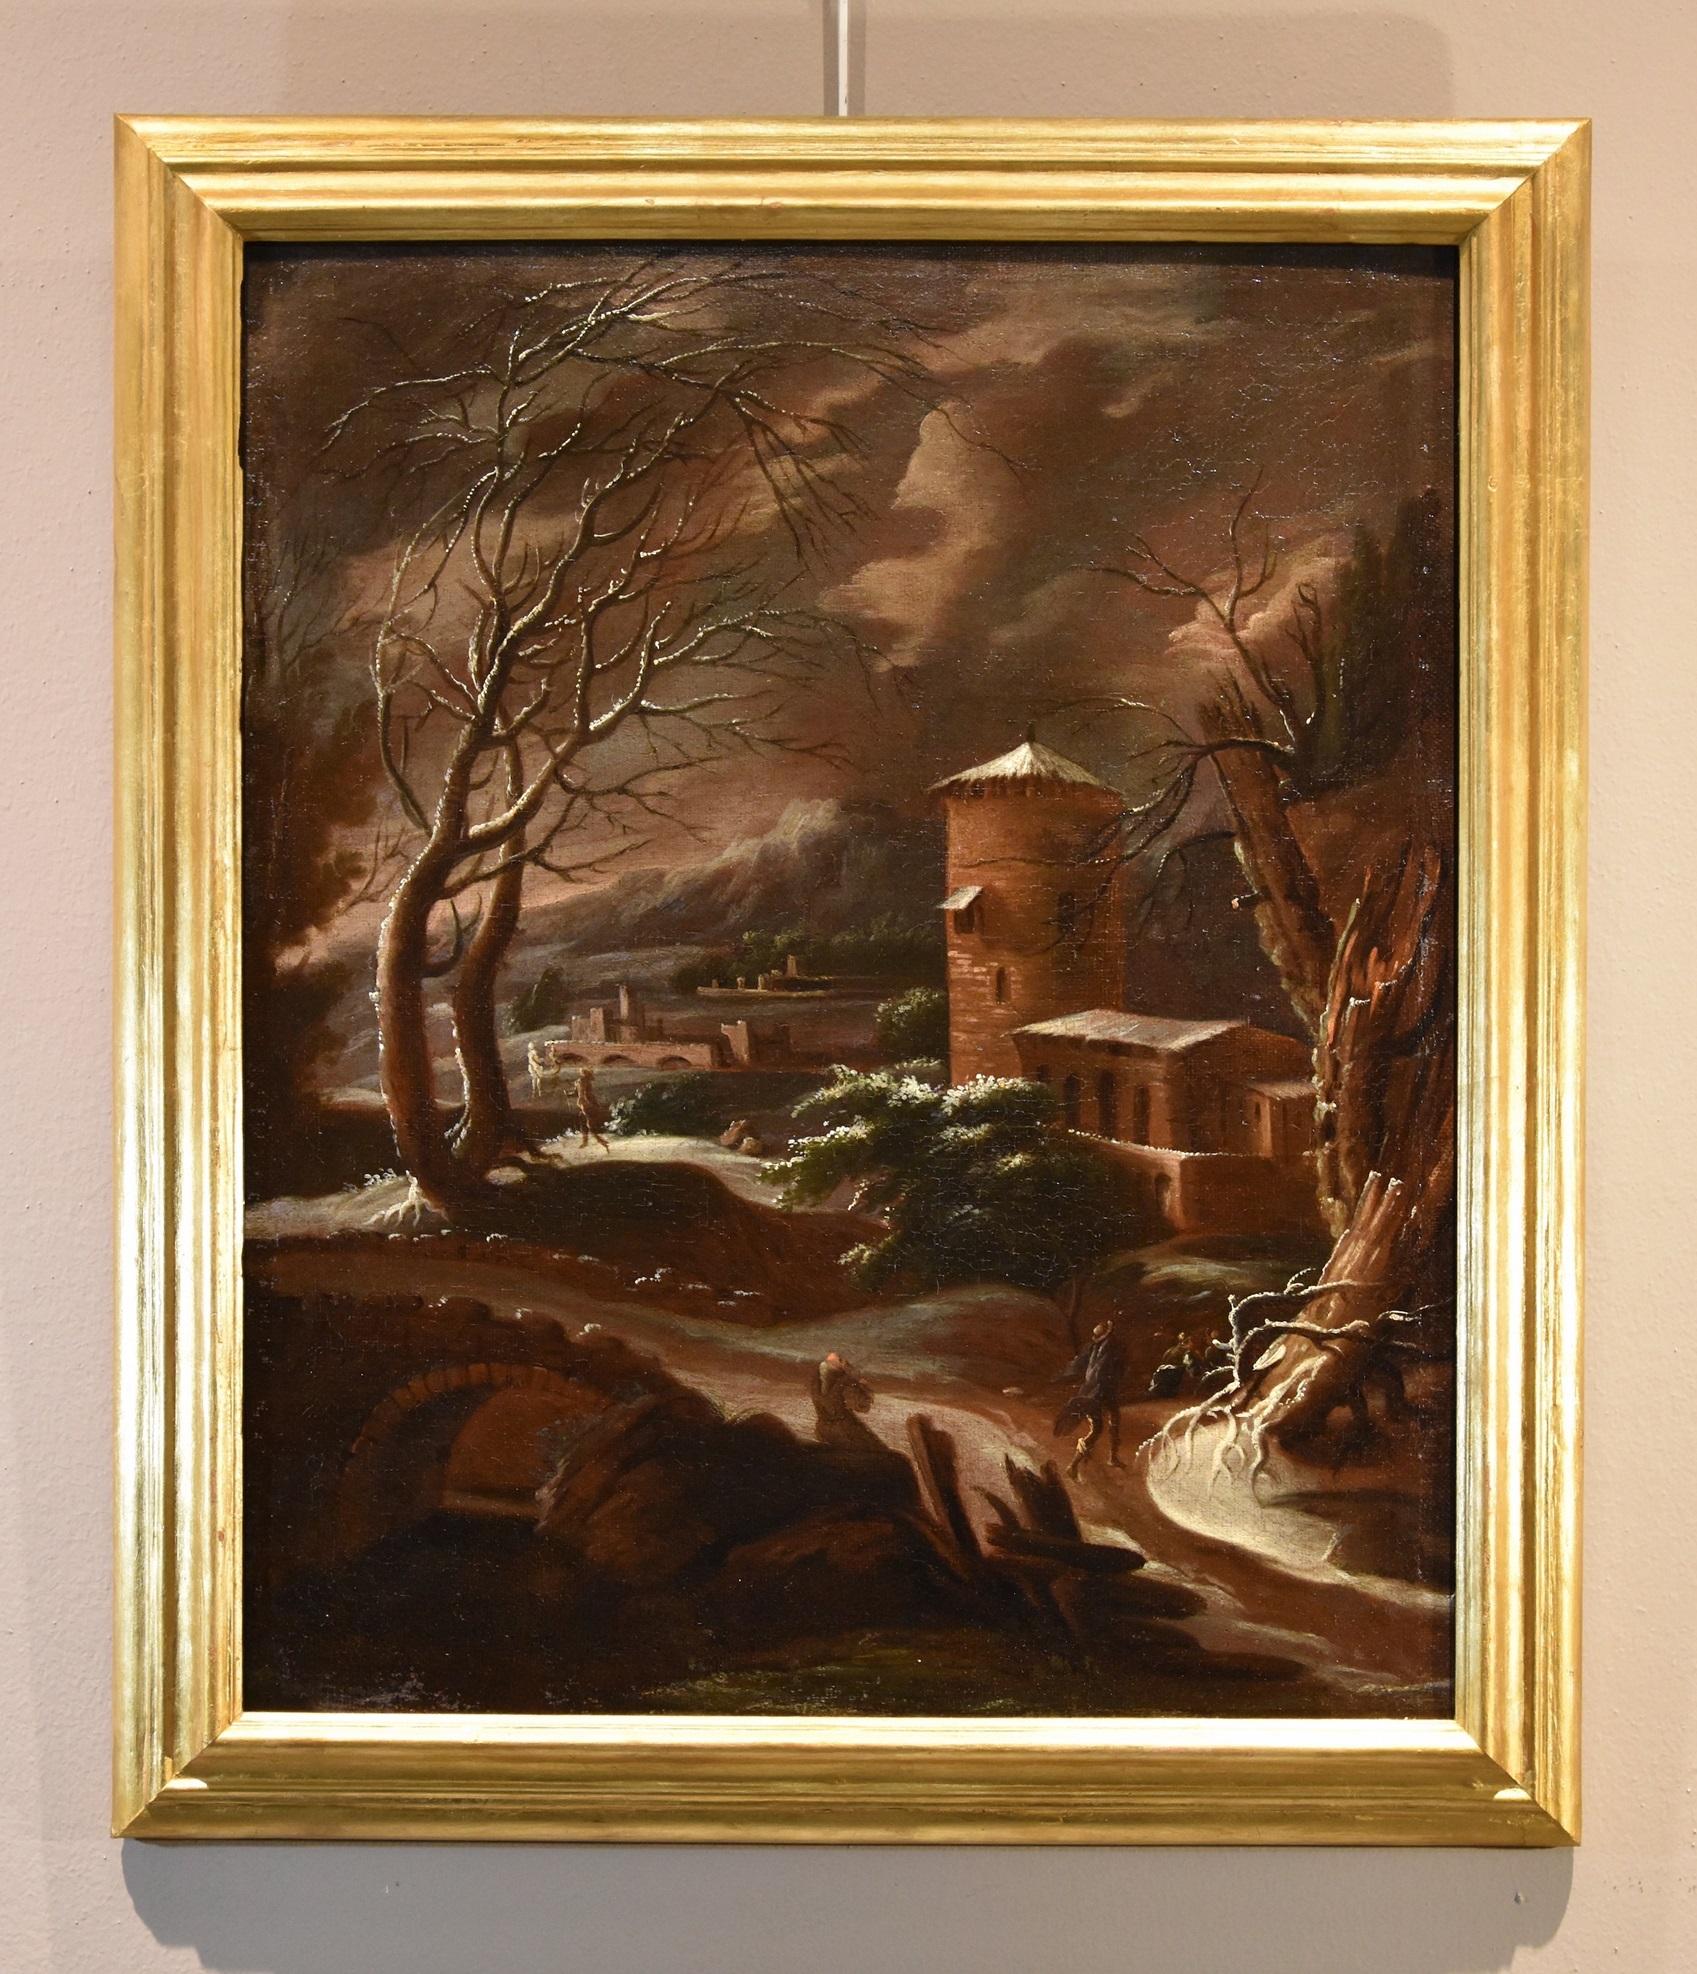  Francesco Foschi (ancona, 1710 - Rome, 1780)  Landscape Painting – Winterlandschaft, Foschi, Gemälde, 18. Jahrhundert, CEntury, Öl auf Leinwand, Alter Meister, Italien